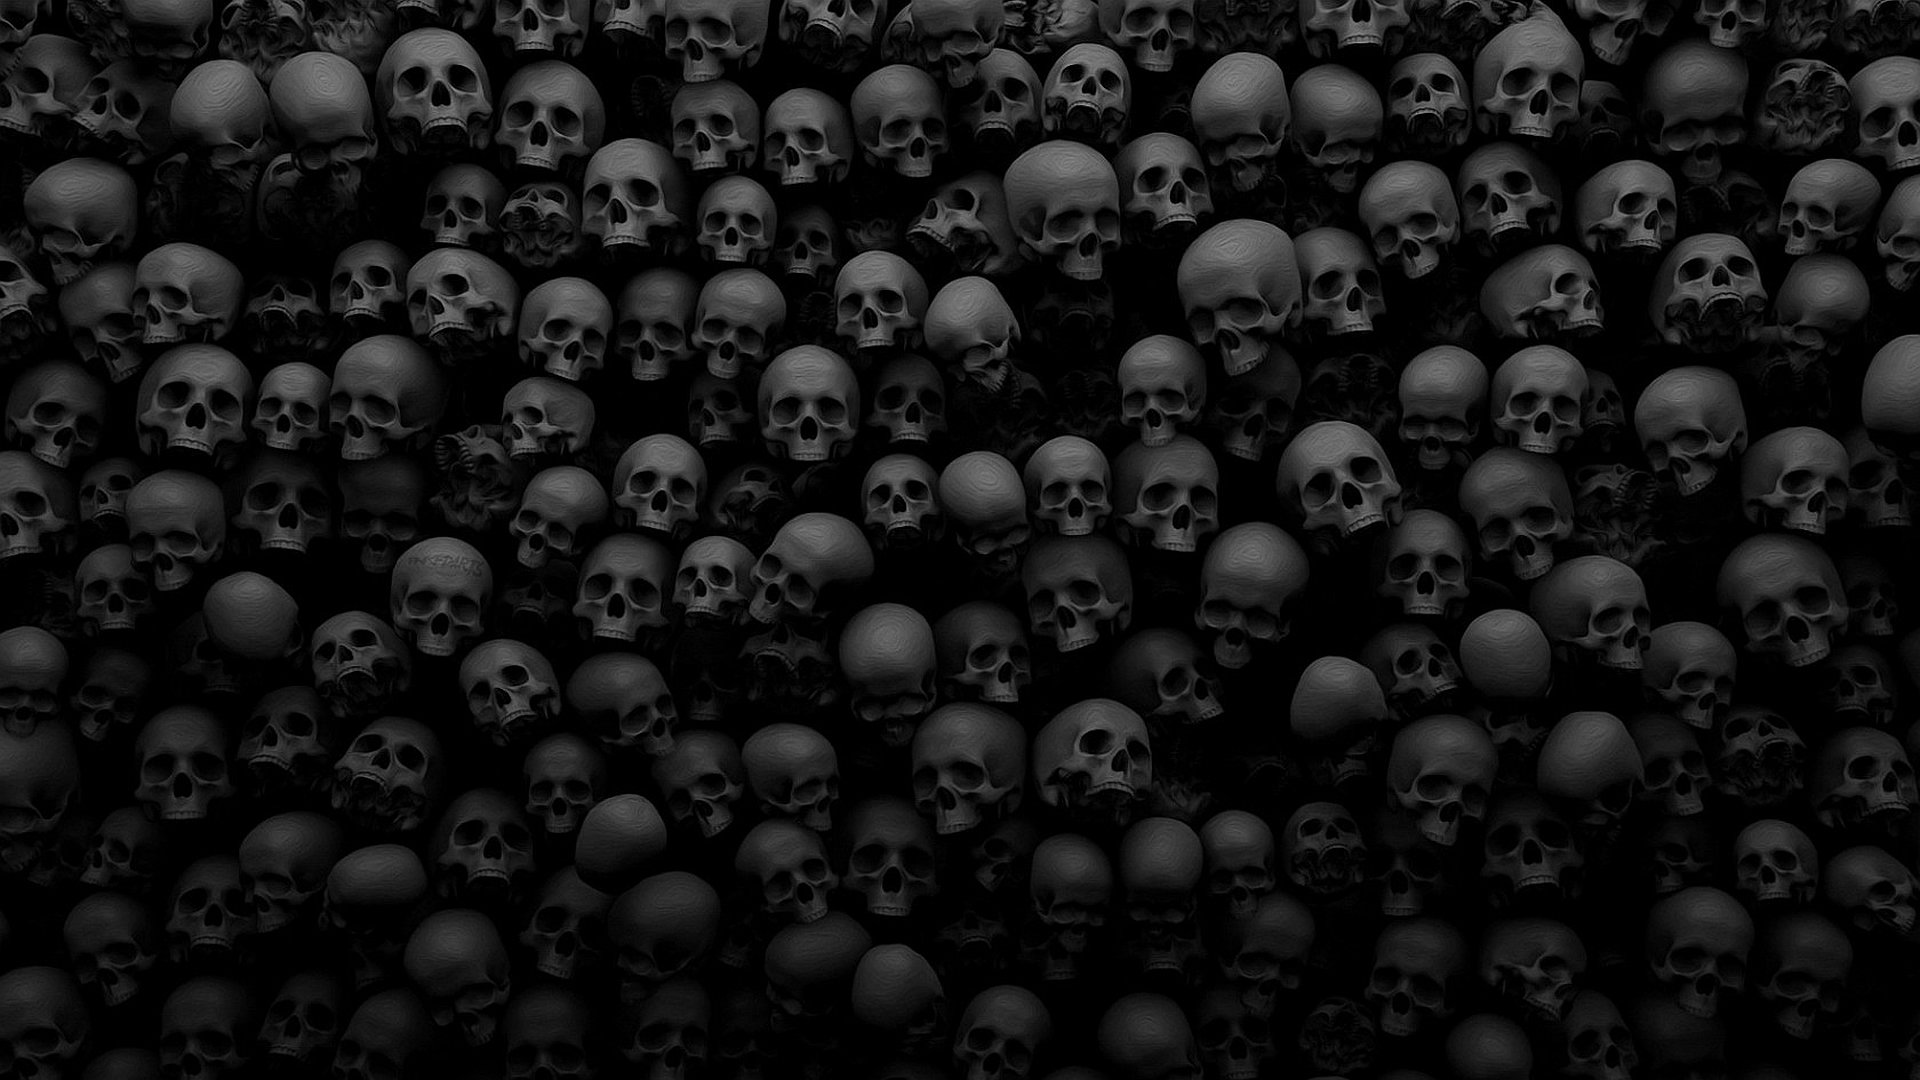 Skull HD Wallpaper Background Image 1920x1080 ID 612706 Wallpaper Abyss